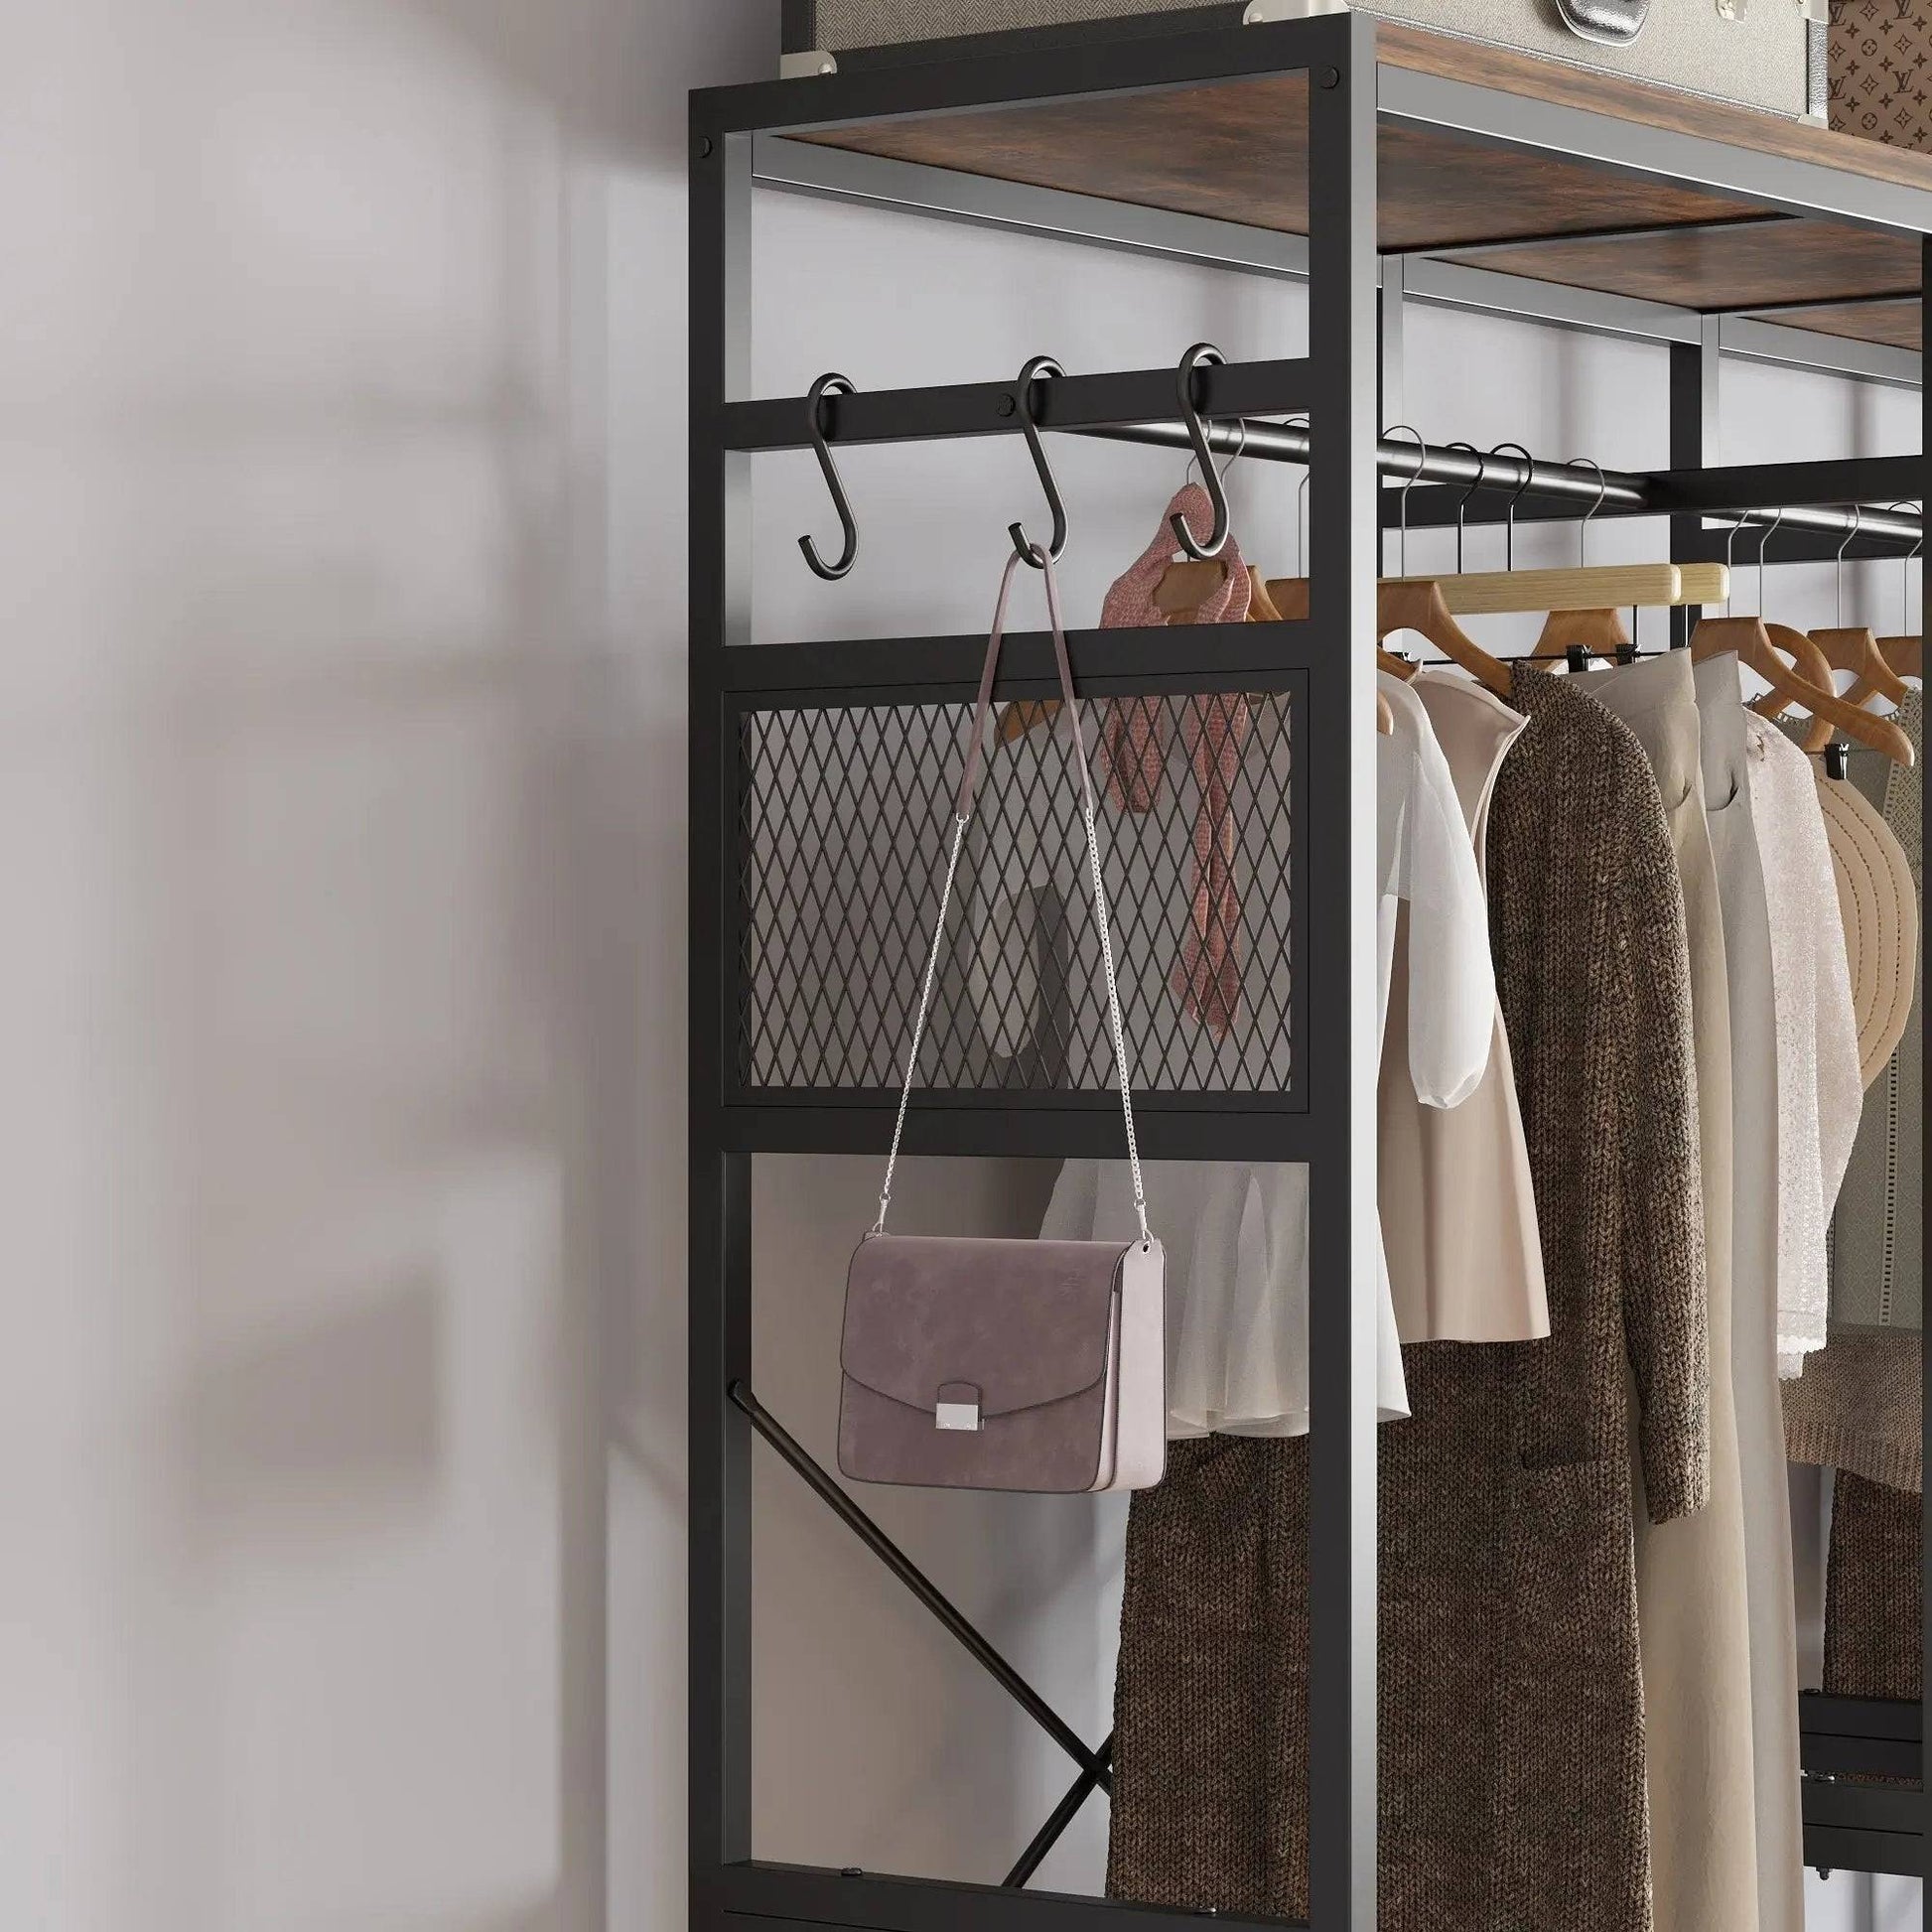 Independent wardrobe manager, clothes rack, multiple storage racks